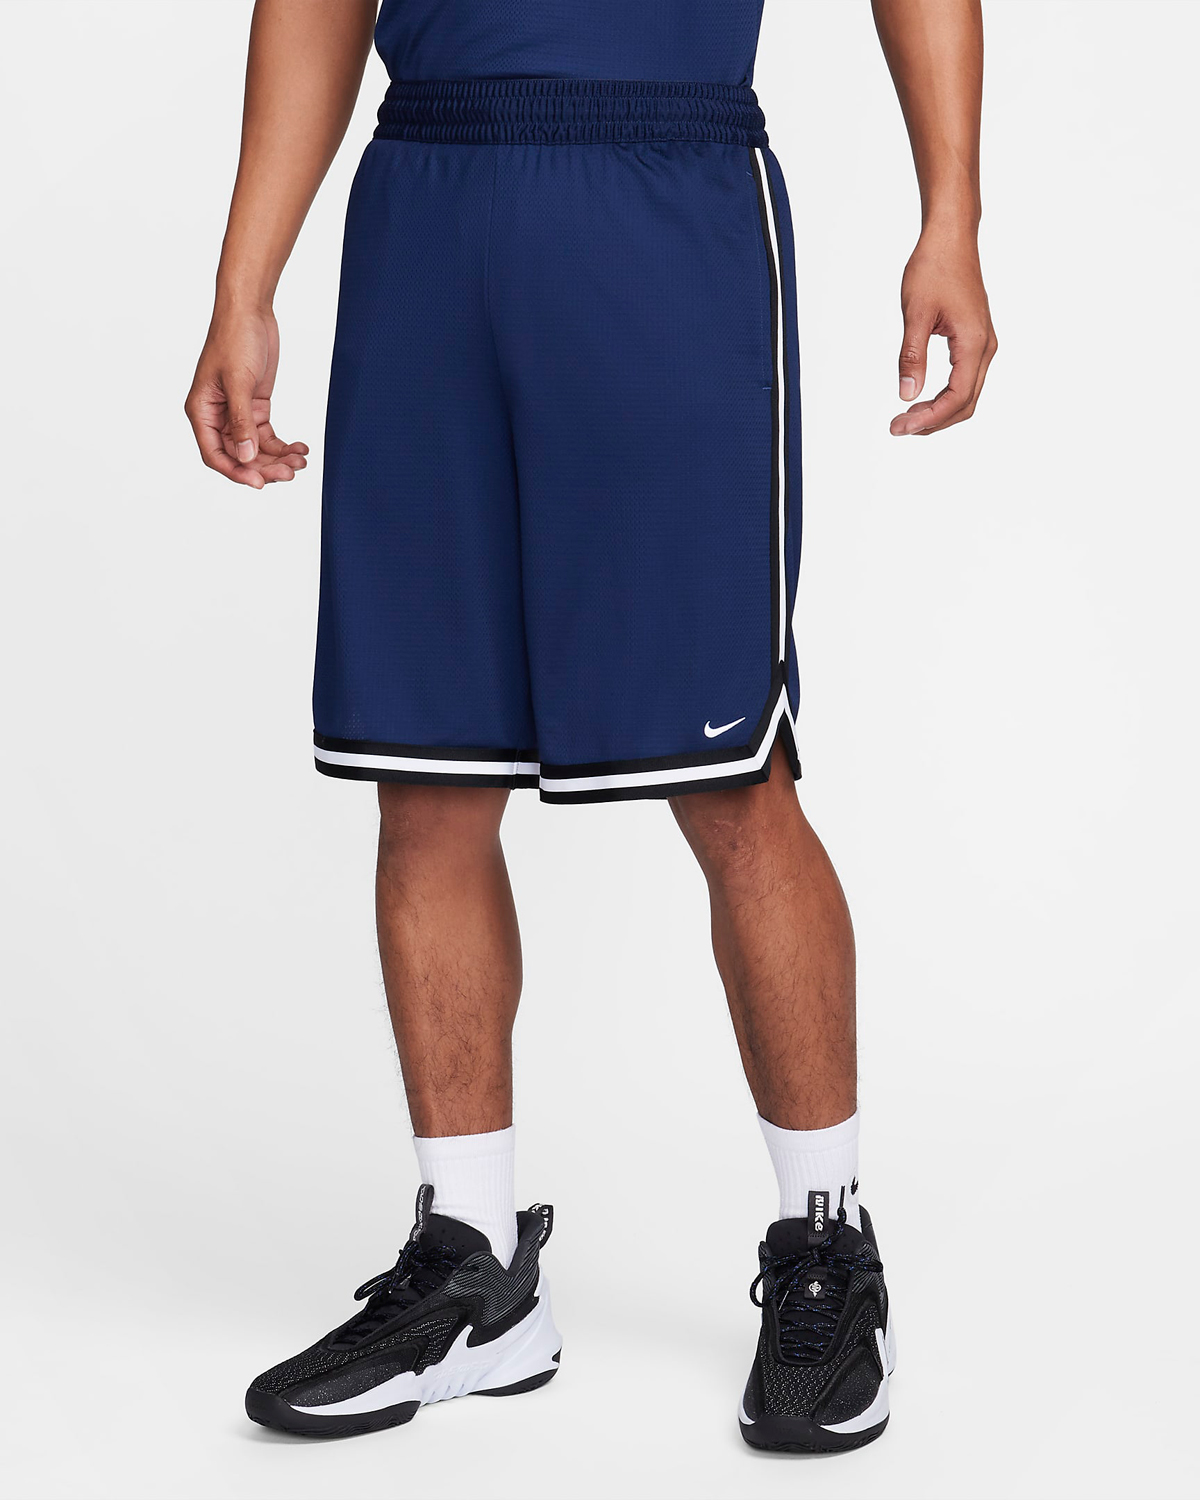 Nike-DNA-Basketball-Shorts-Midnight-Navy